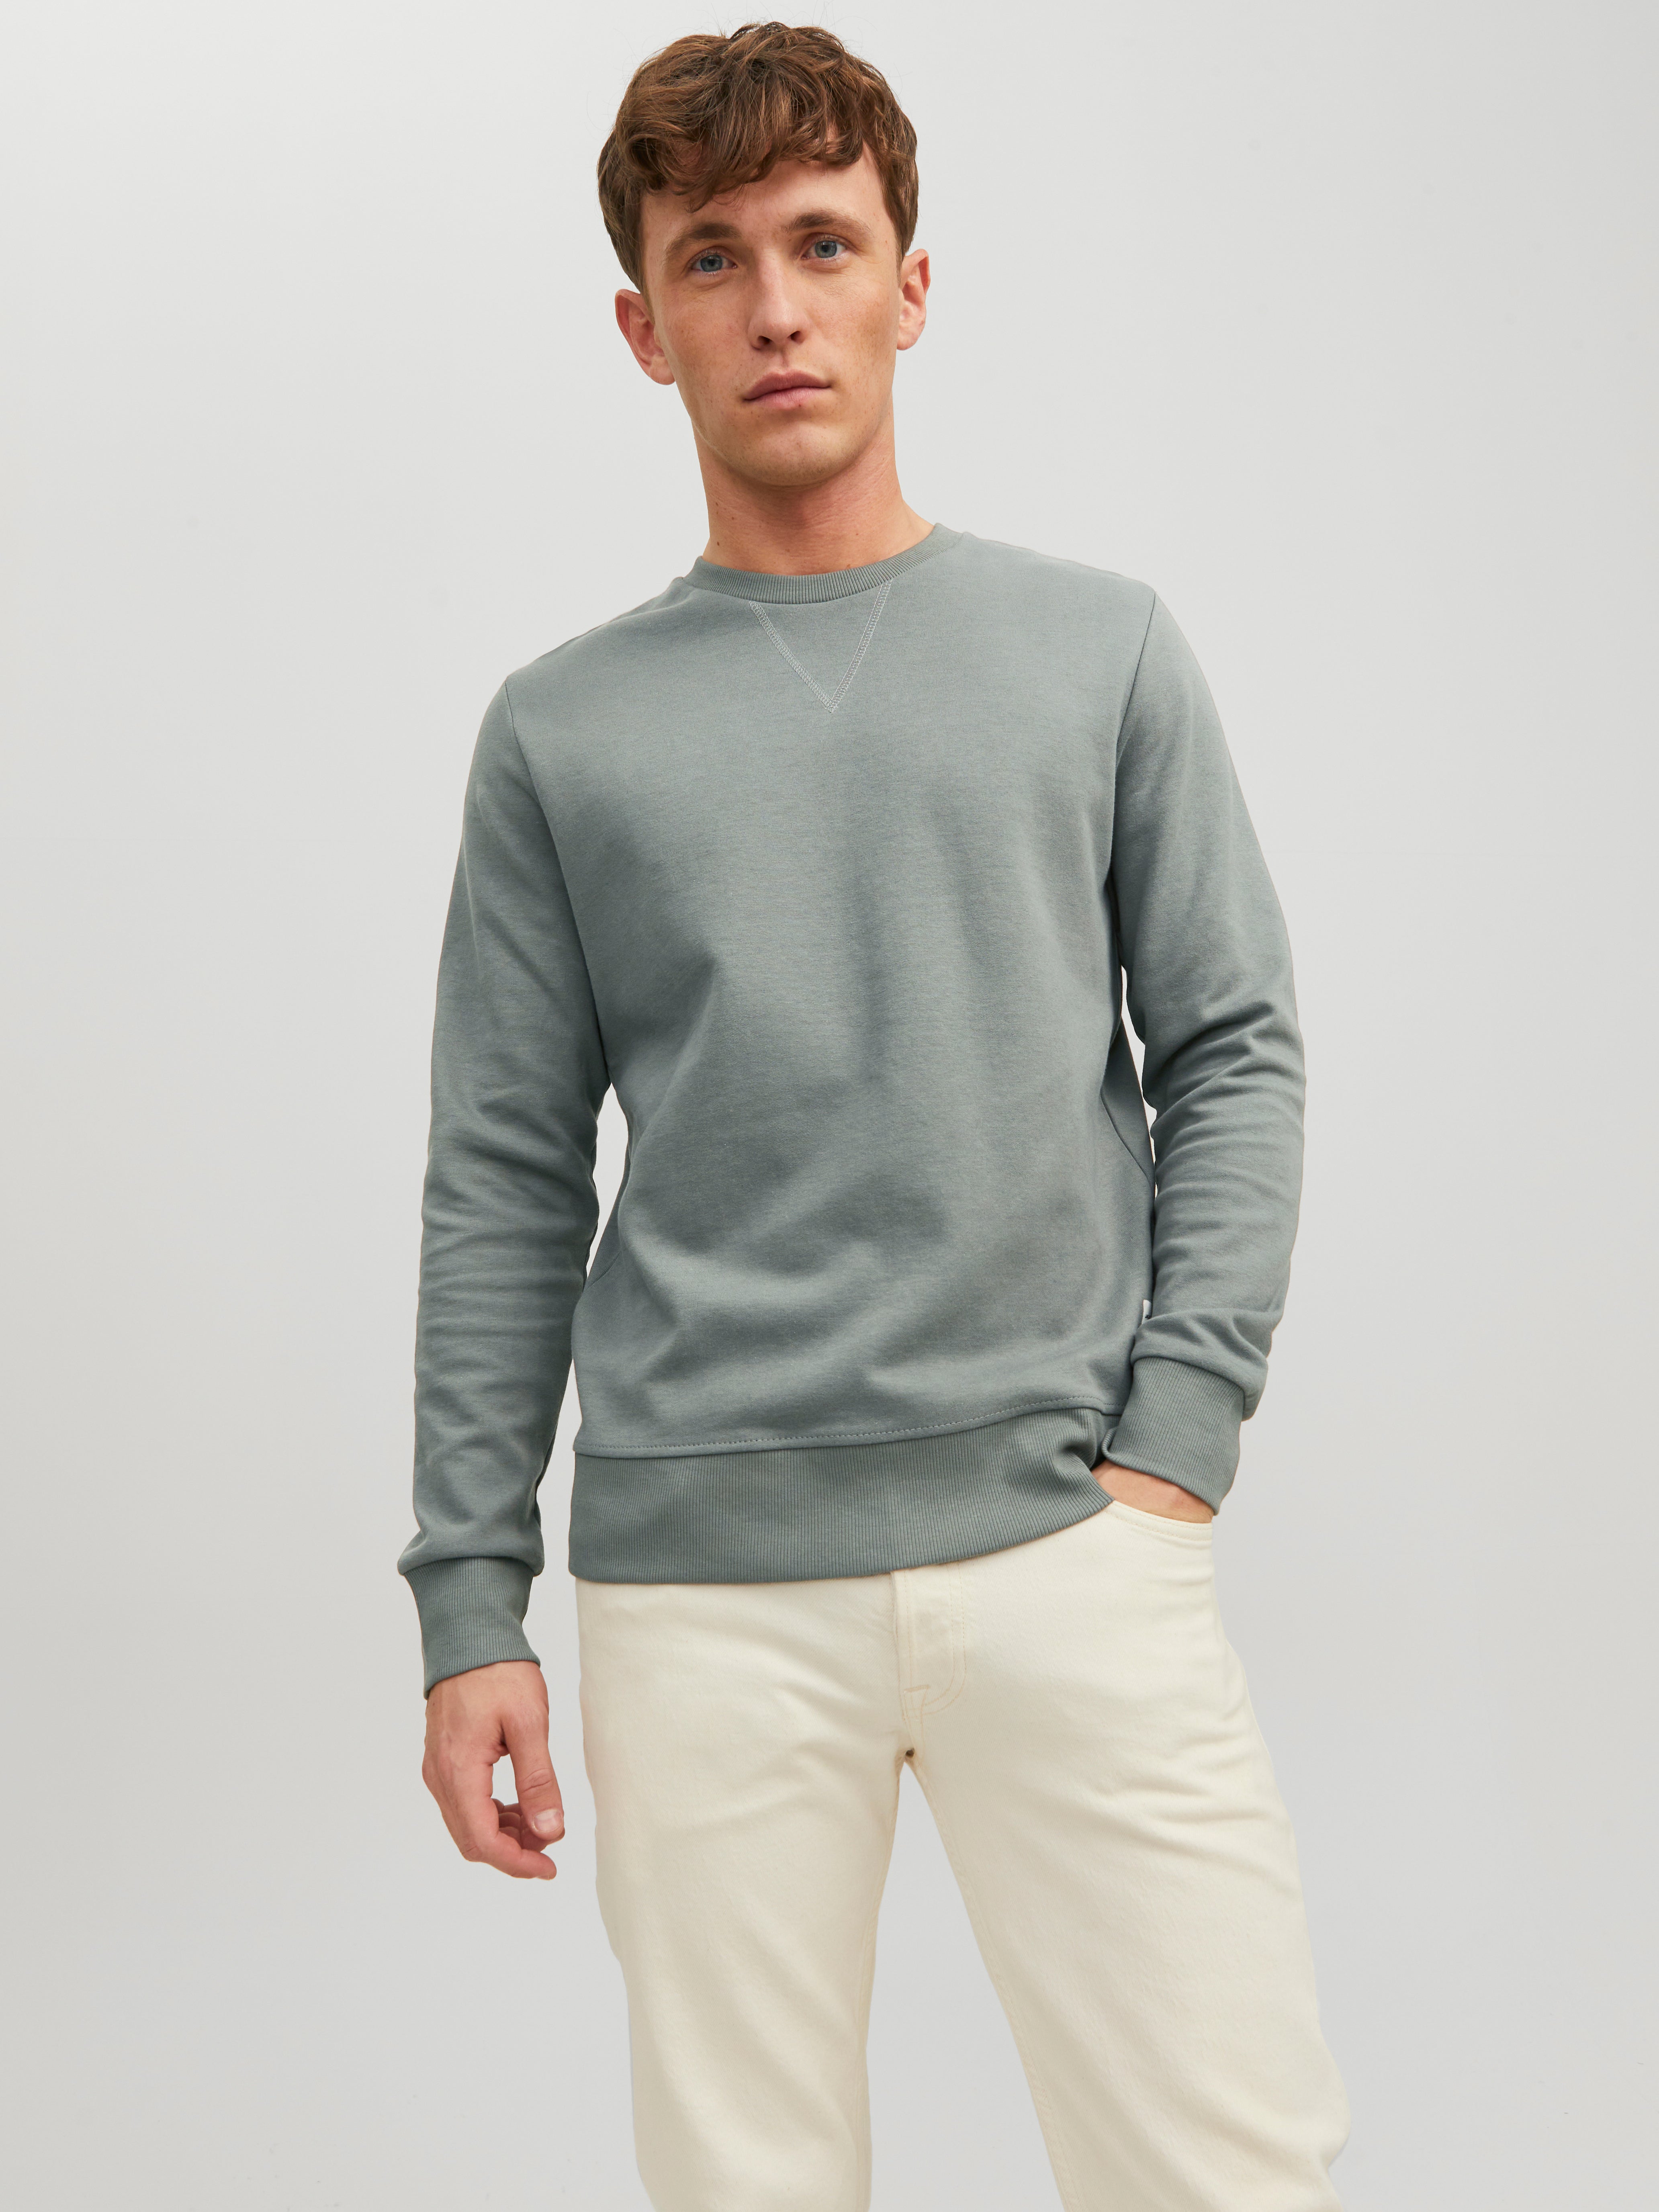 MEN FASHION Jumpers & Sweatshirts Hoodless discount 57% Beige L Jack & Jones sweatshirt 